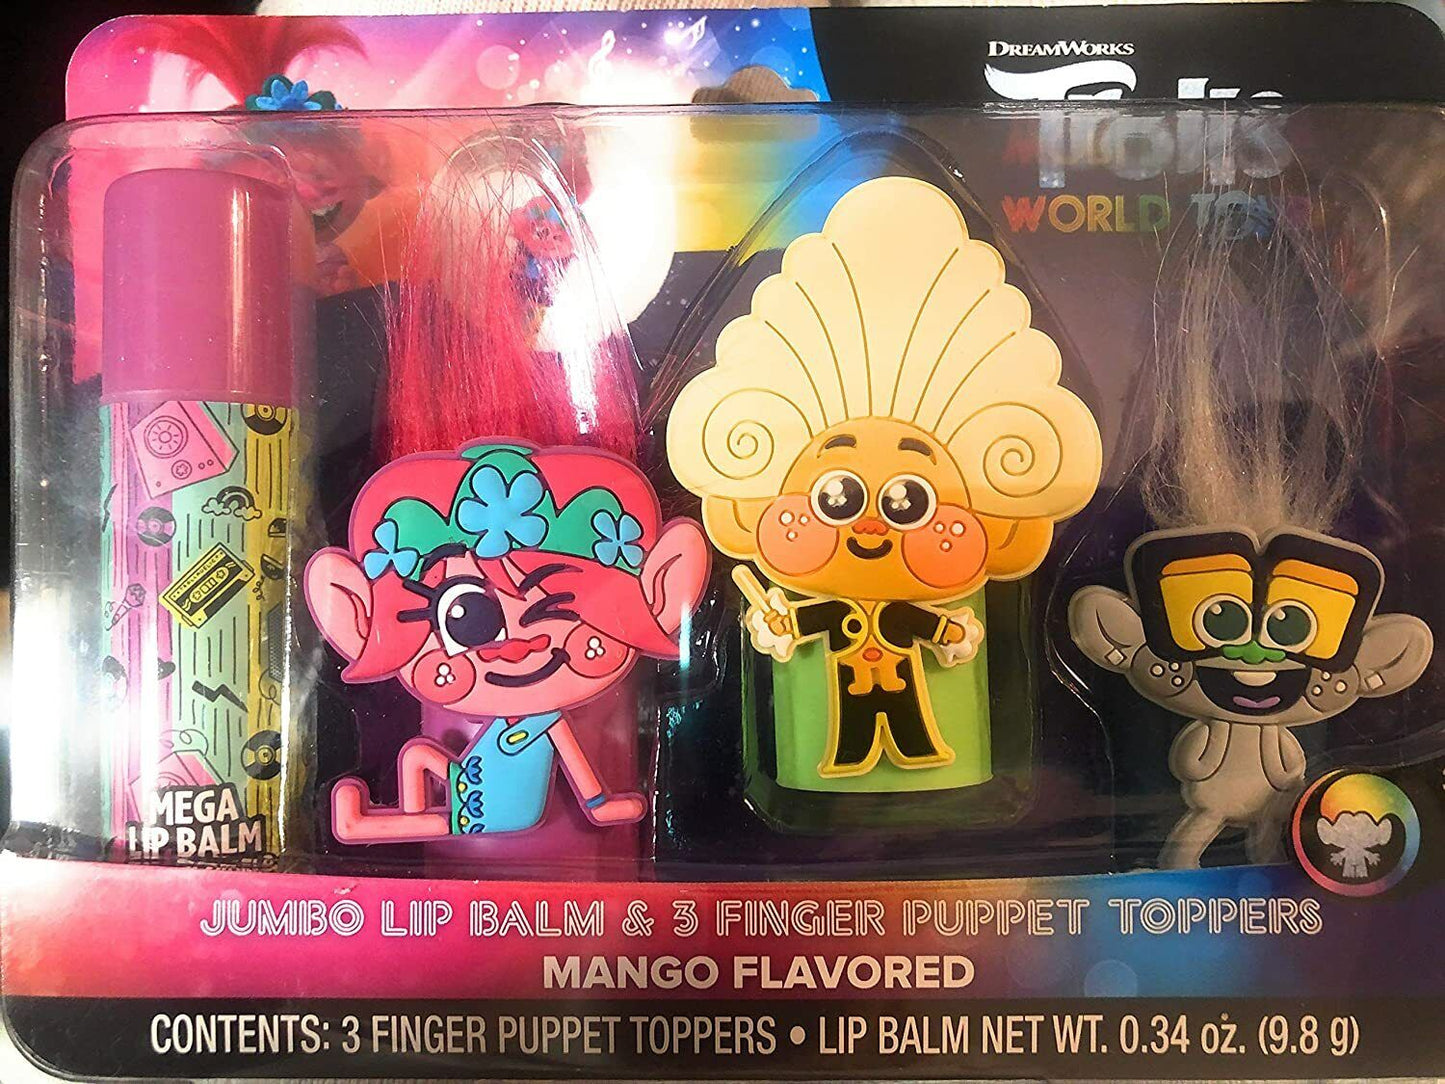 Dreamworks Trolls World Tour Jumbo Lip Balm 3 Finger Puppet Toppers Mango Flavor